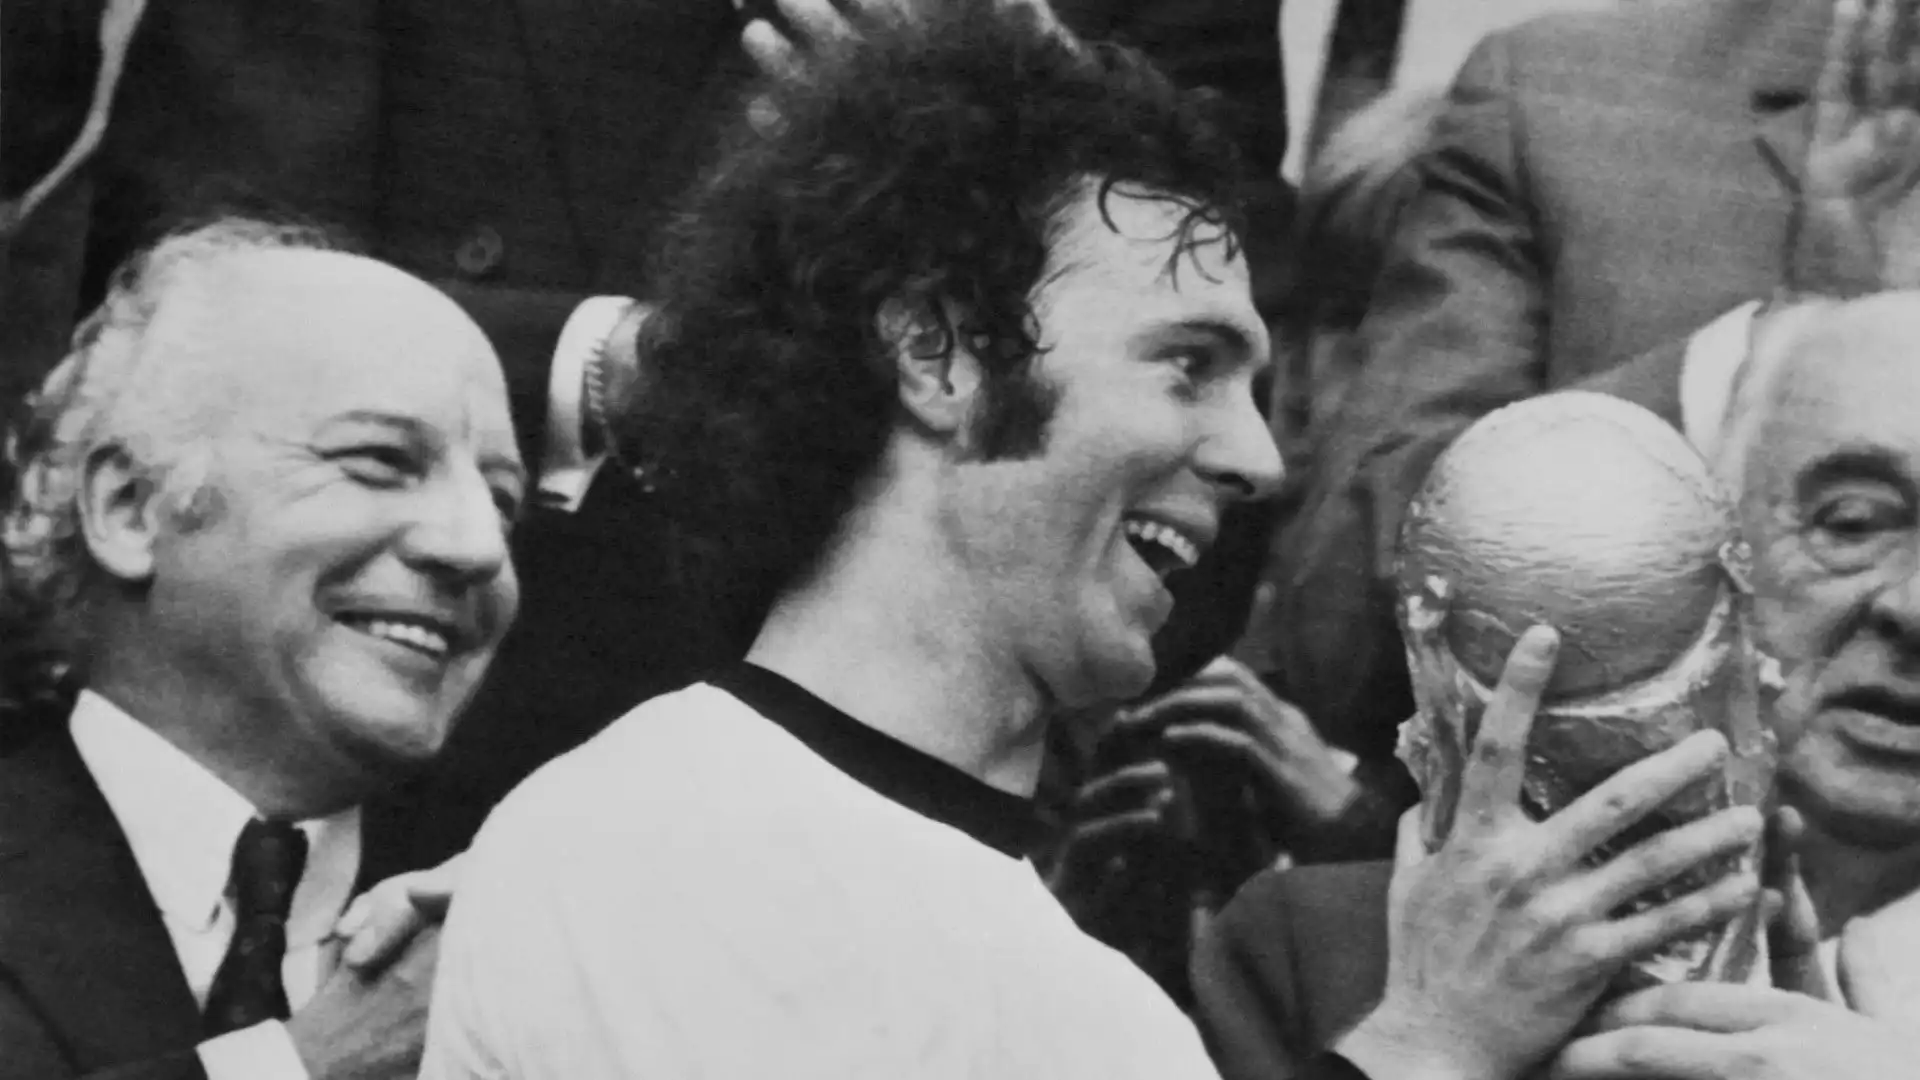 4- Franz Beckenbauer